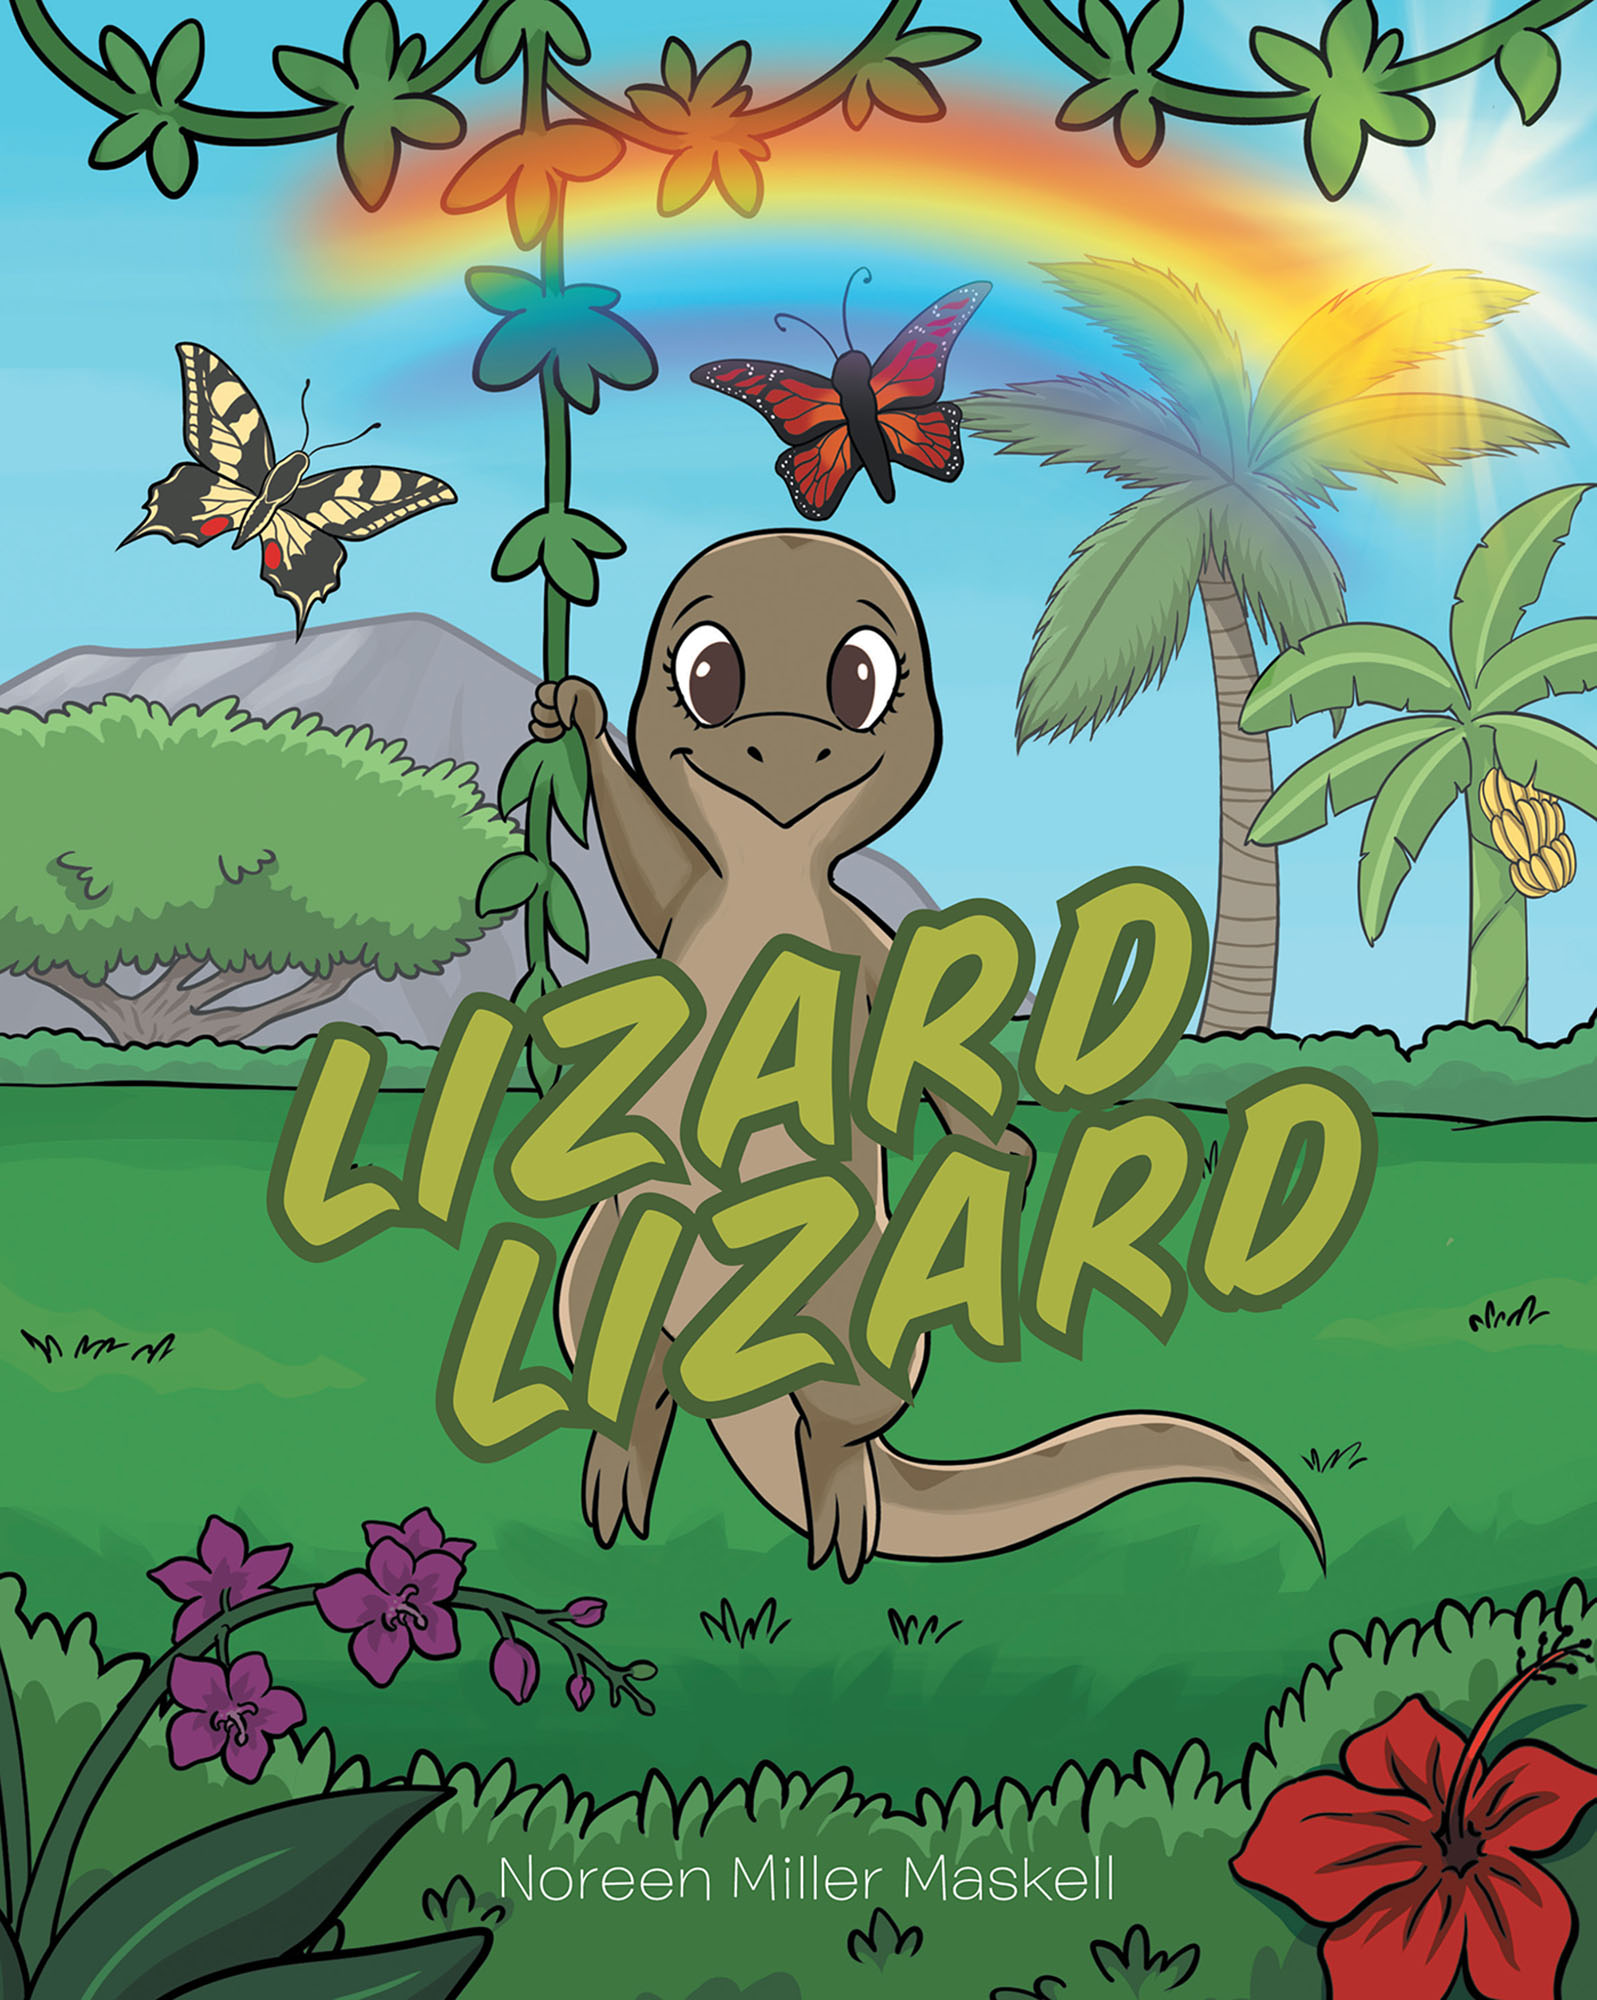 Lizard Lizard Cover Image